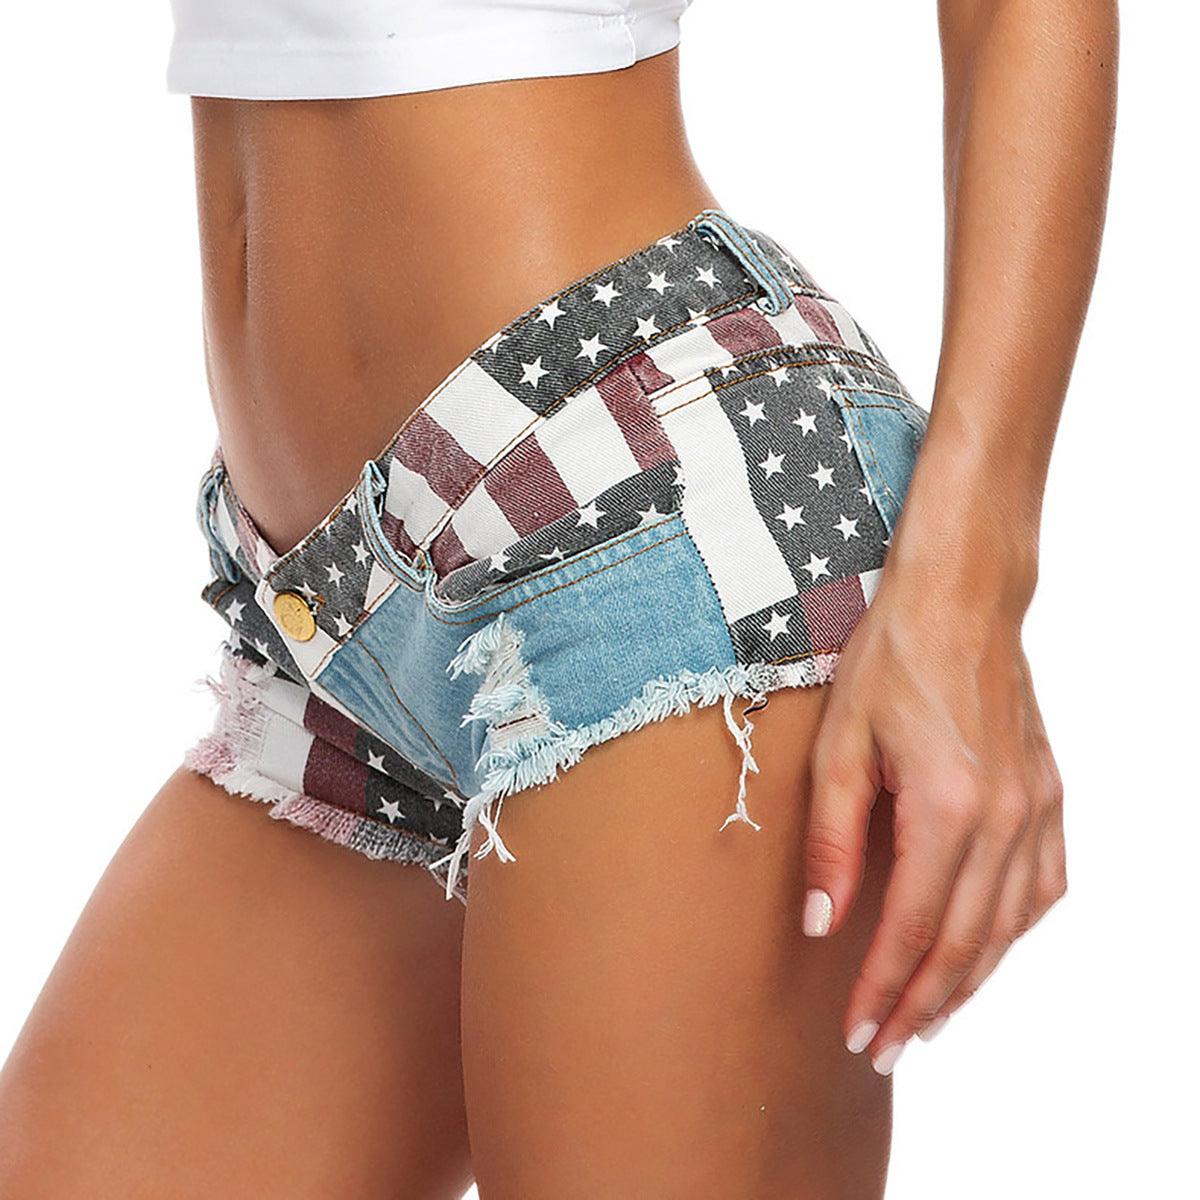 Women's Shorts Usa Flag Cut-Off Jean Shorts Stretch Denim Micro Short 4Th Of...